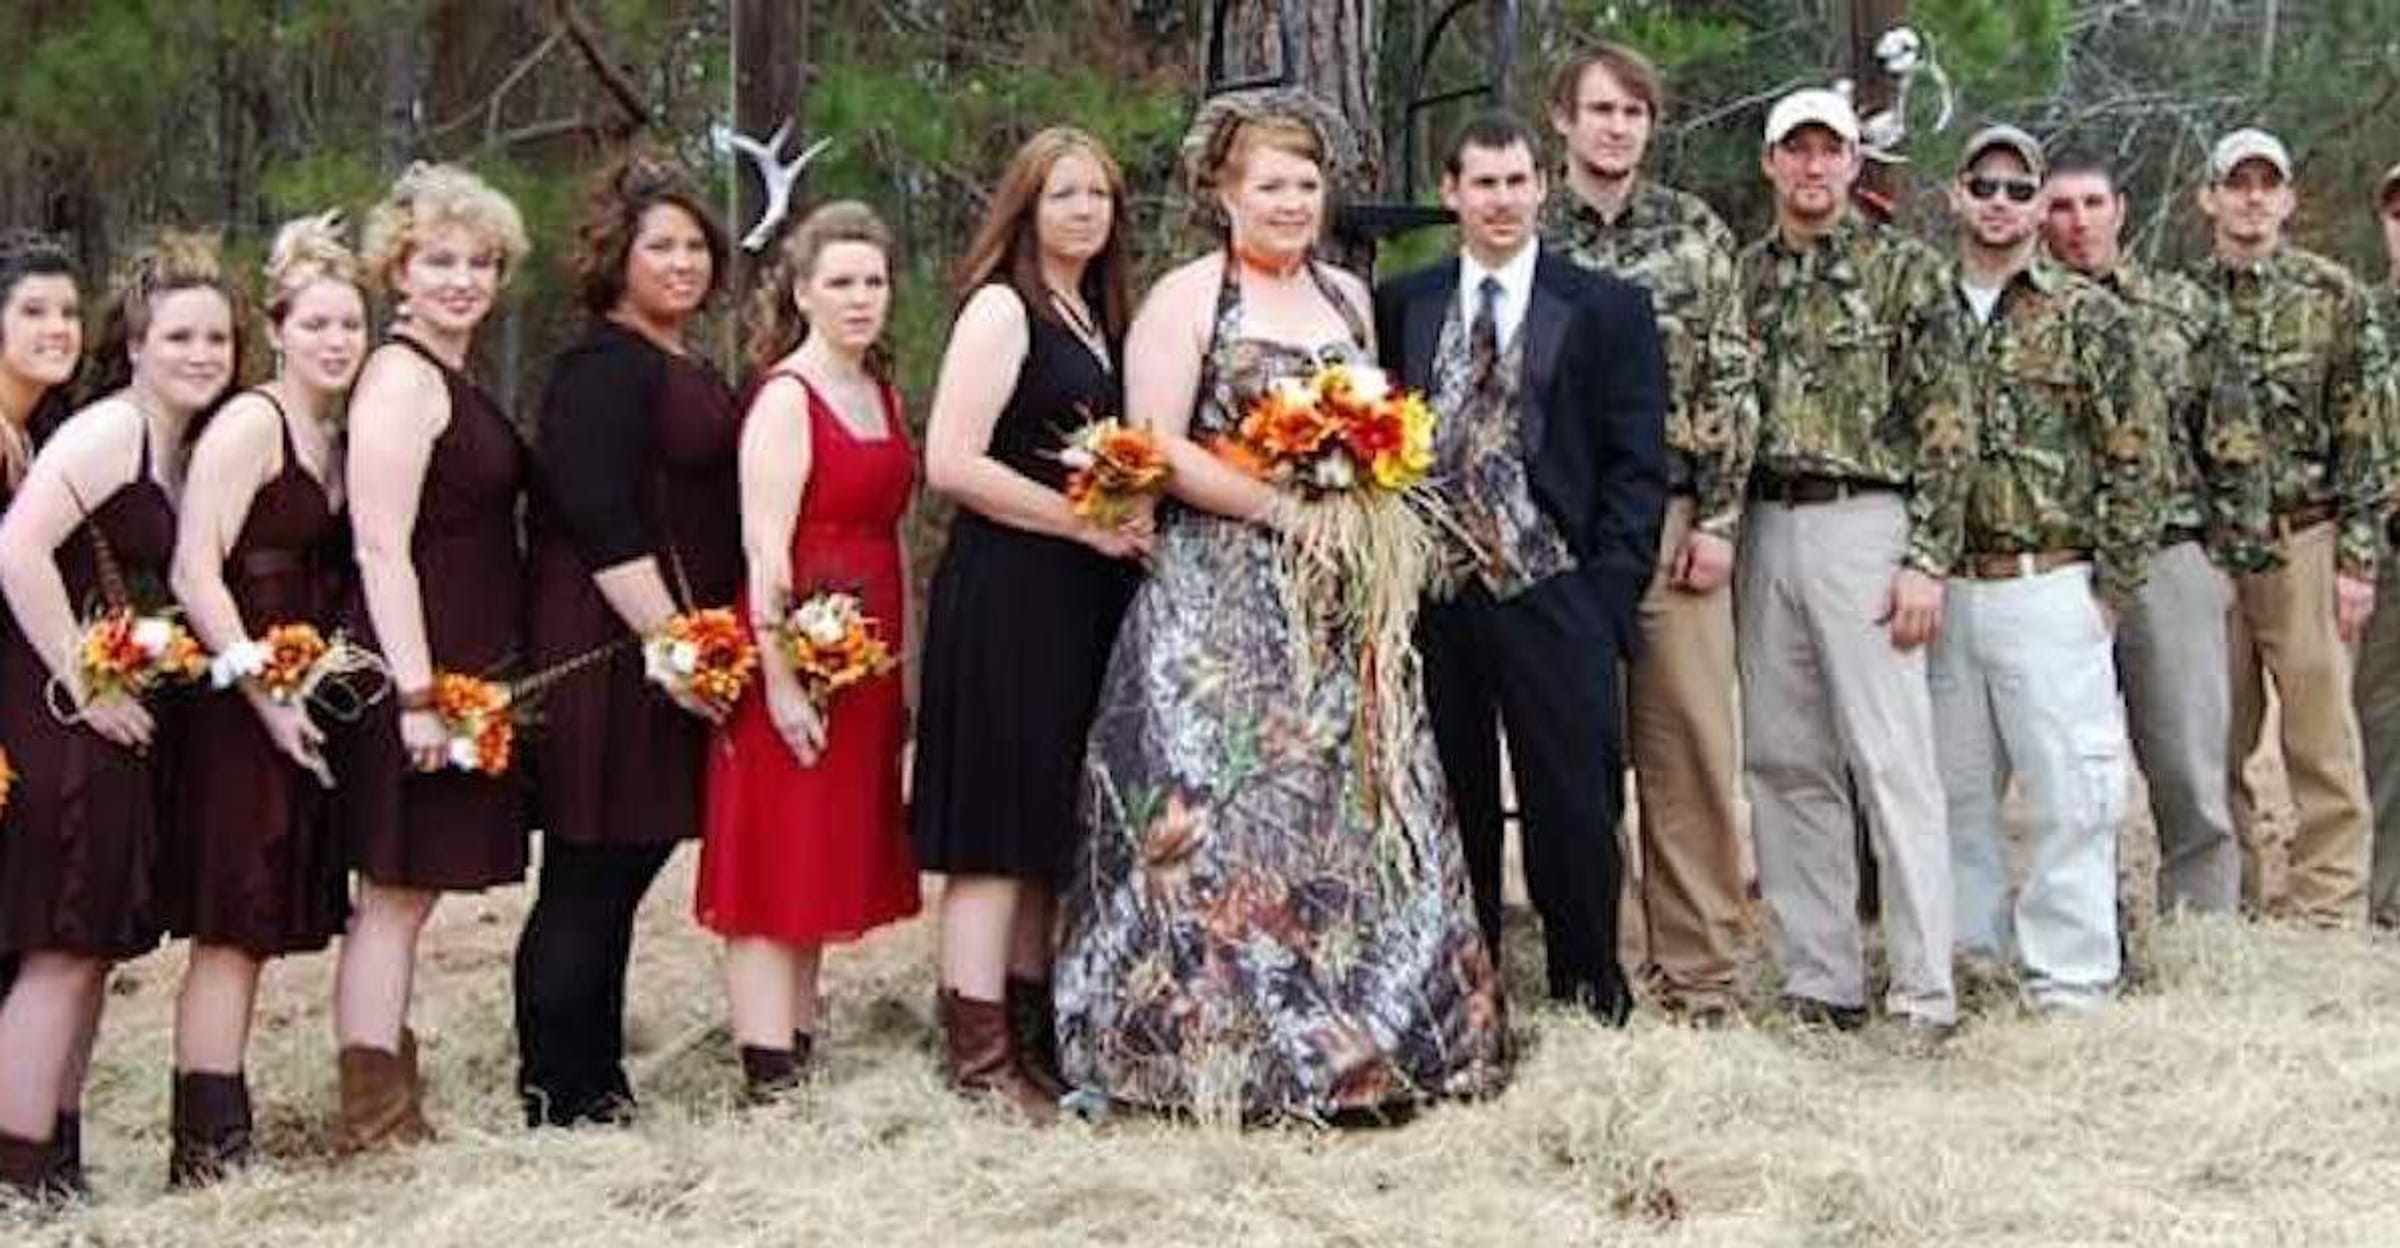 Redneck Wedding Photos | Trashy Pics from Hillbilly Weddings